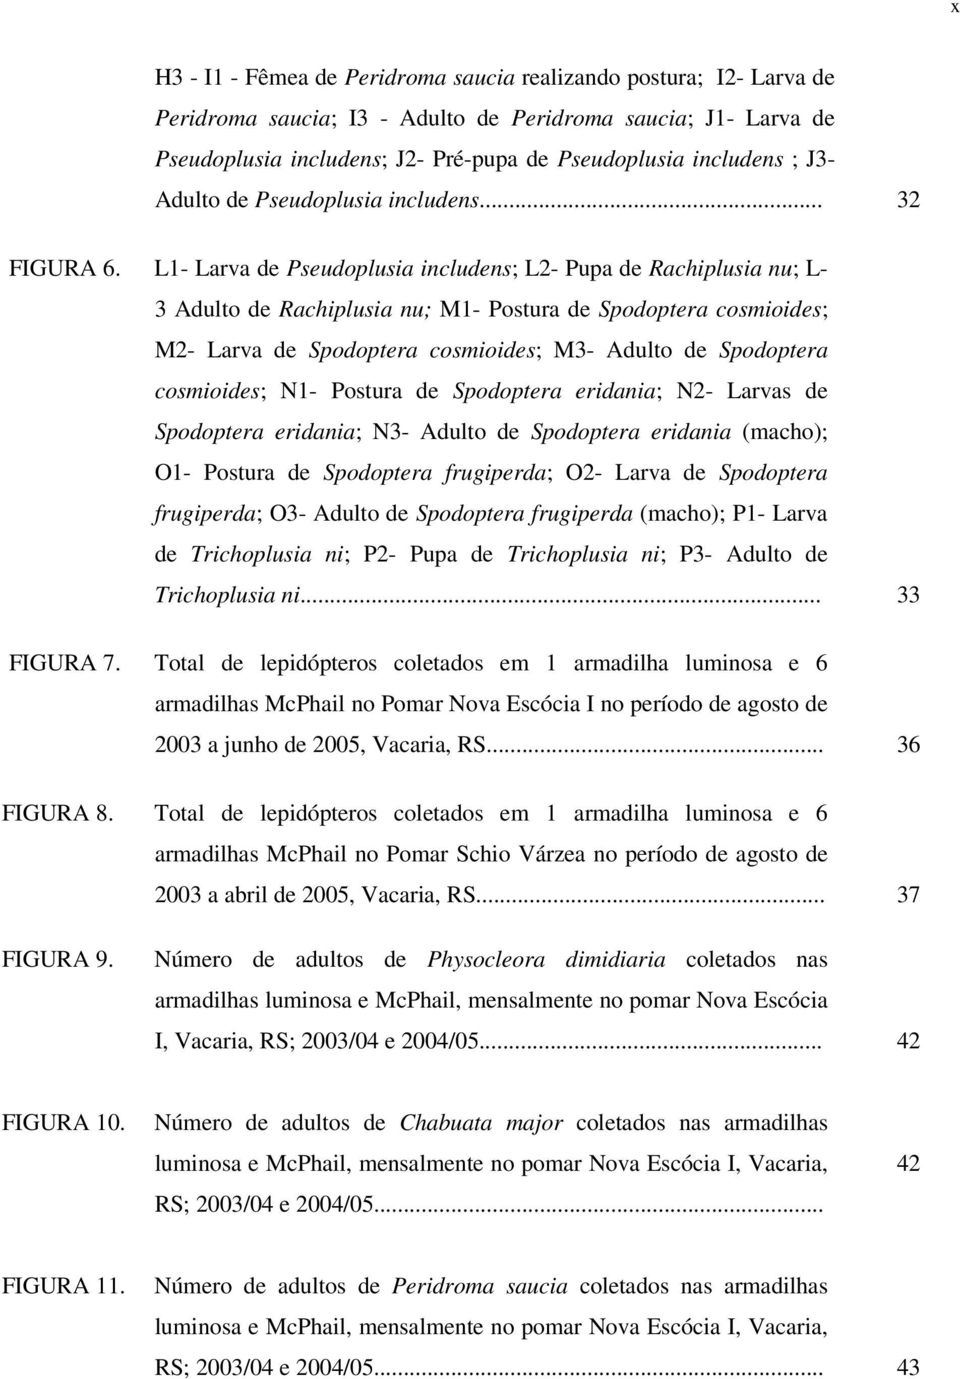 L1- Larva de Pseudoplusia includens; L2- Pupa de Rachiplusia nu; L- 3 Adulto de Rachiplusia nu; M1- Postura de Spodoptera cosmioides; M2- Larva de Spodoptera cosmioides; M3- Adulto de Spodoptera